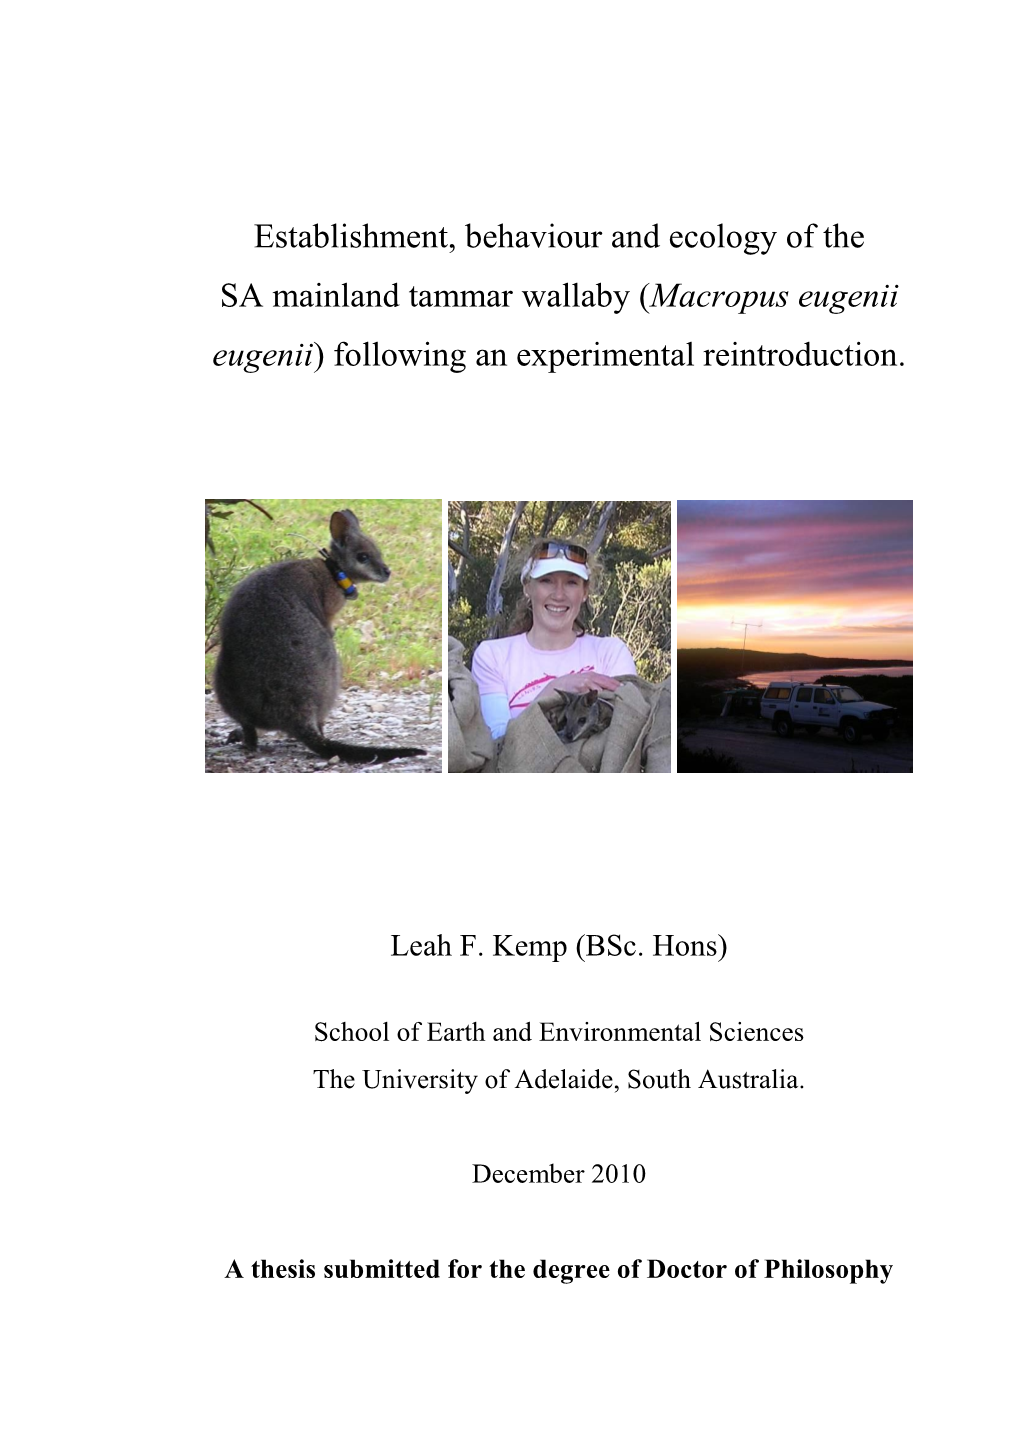 Establishment, Behaviour and Ecology of the SA Mainland Tammar Wallaby (Macropus Eugenii Eugenii) Following an Experimental Reintroduction